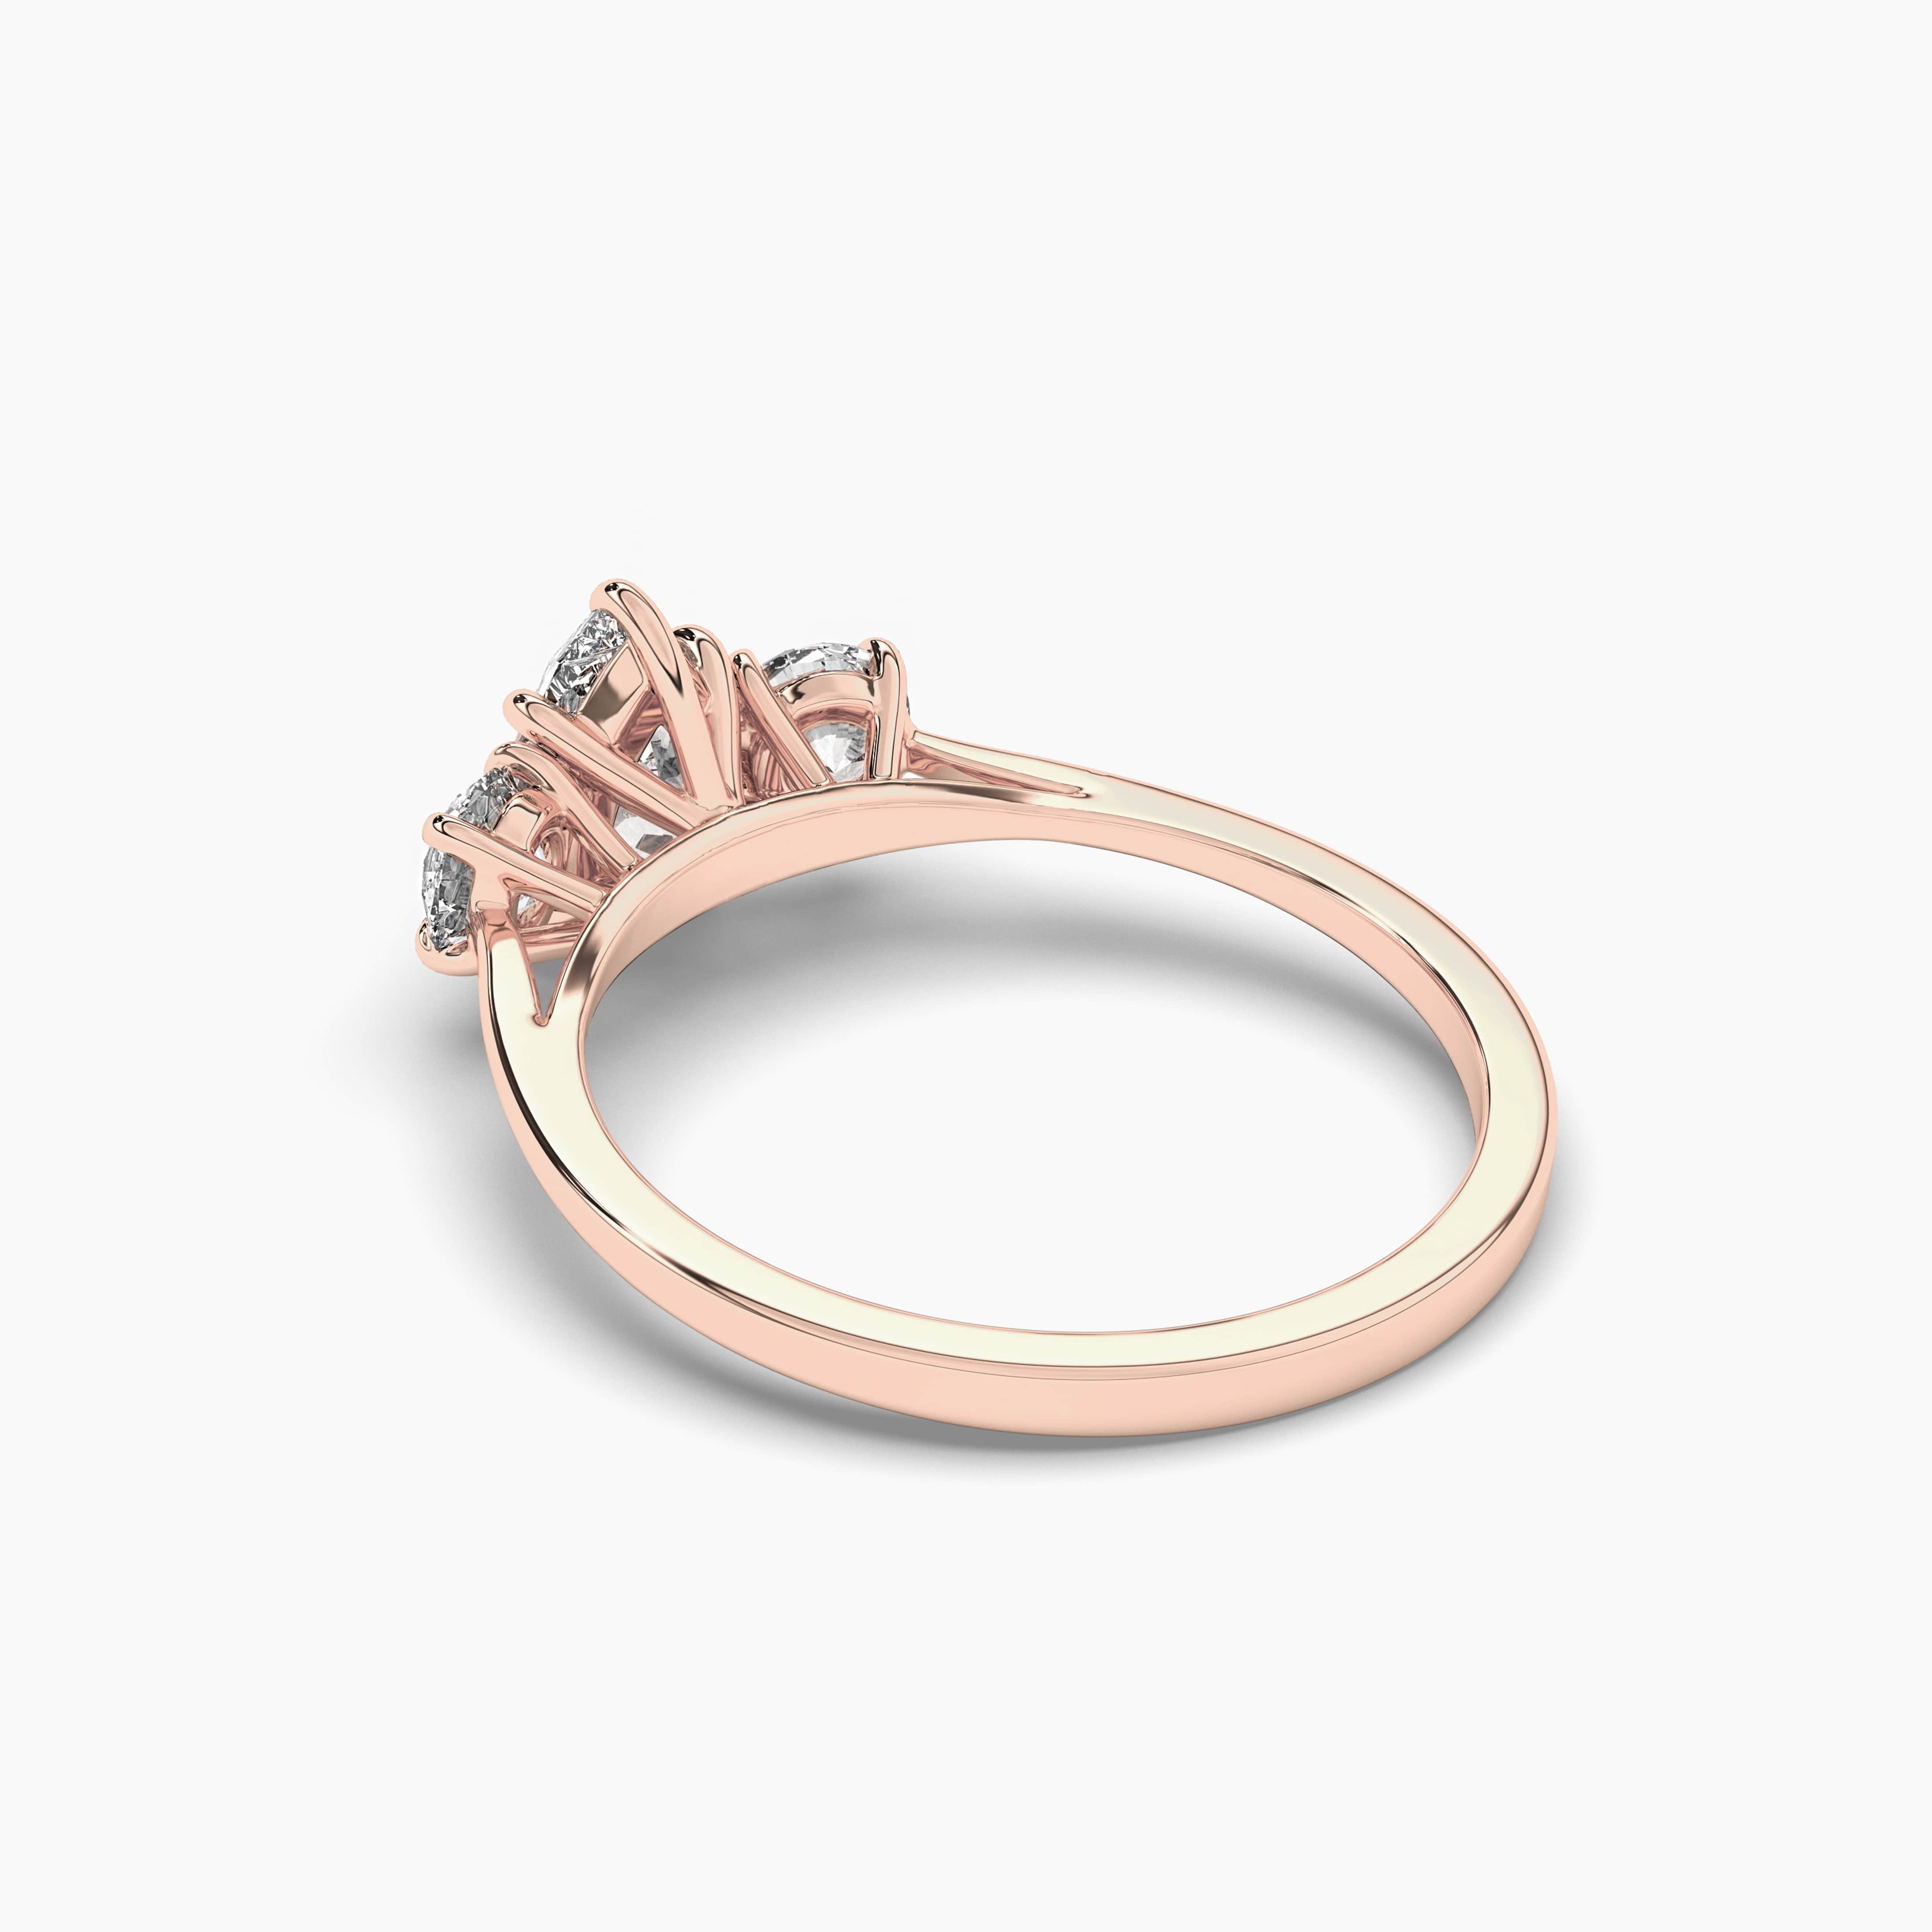 Women's Pear Shaped Unique Engagement Ring